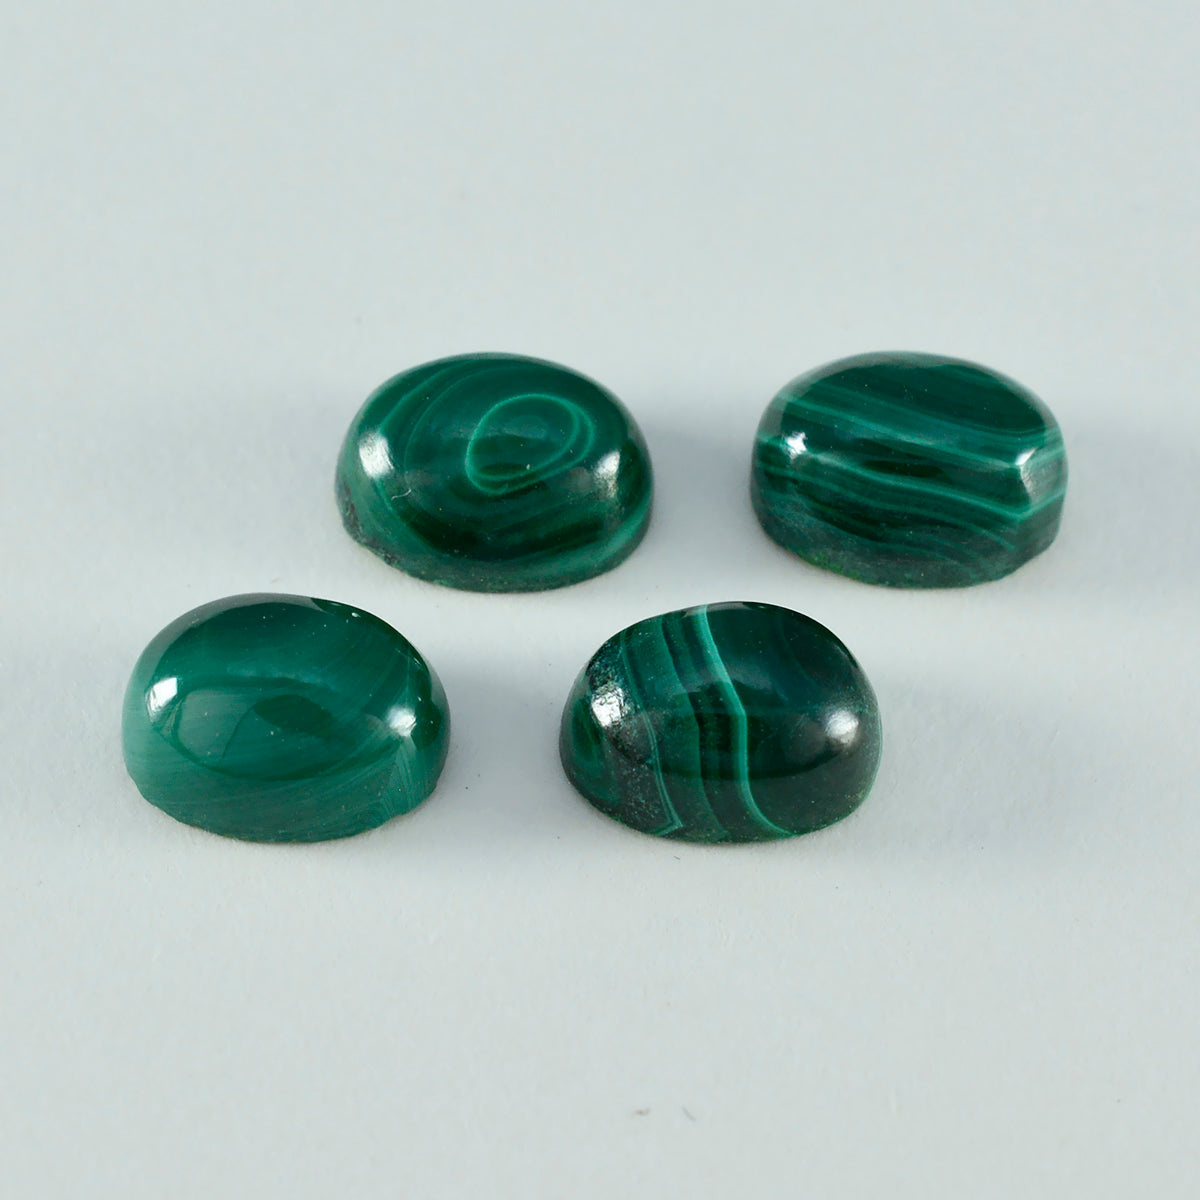 Riyogems 1 Stück grüner Malachit-Cabochon, 4 x 6 mm, ovale Form, süßer Qualitäts-Edelstein